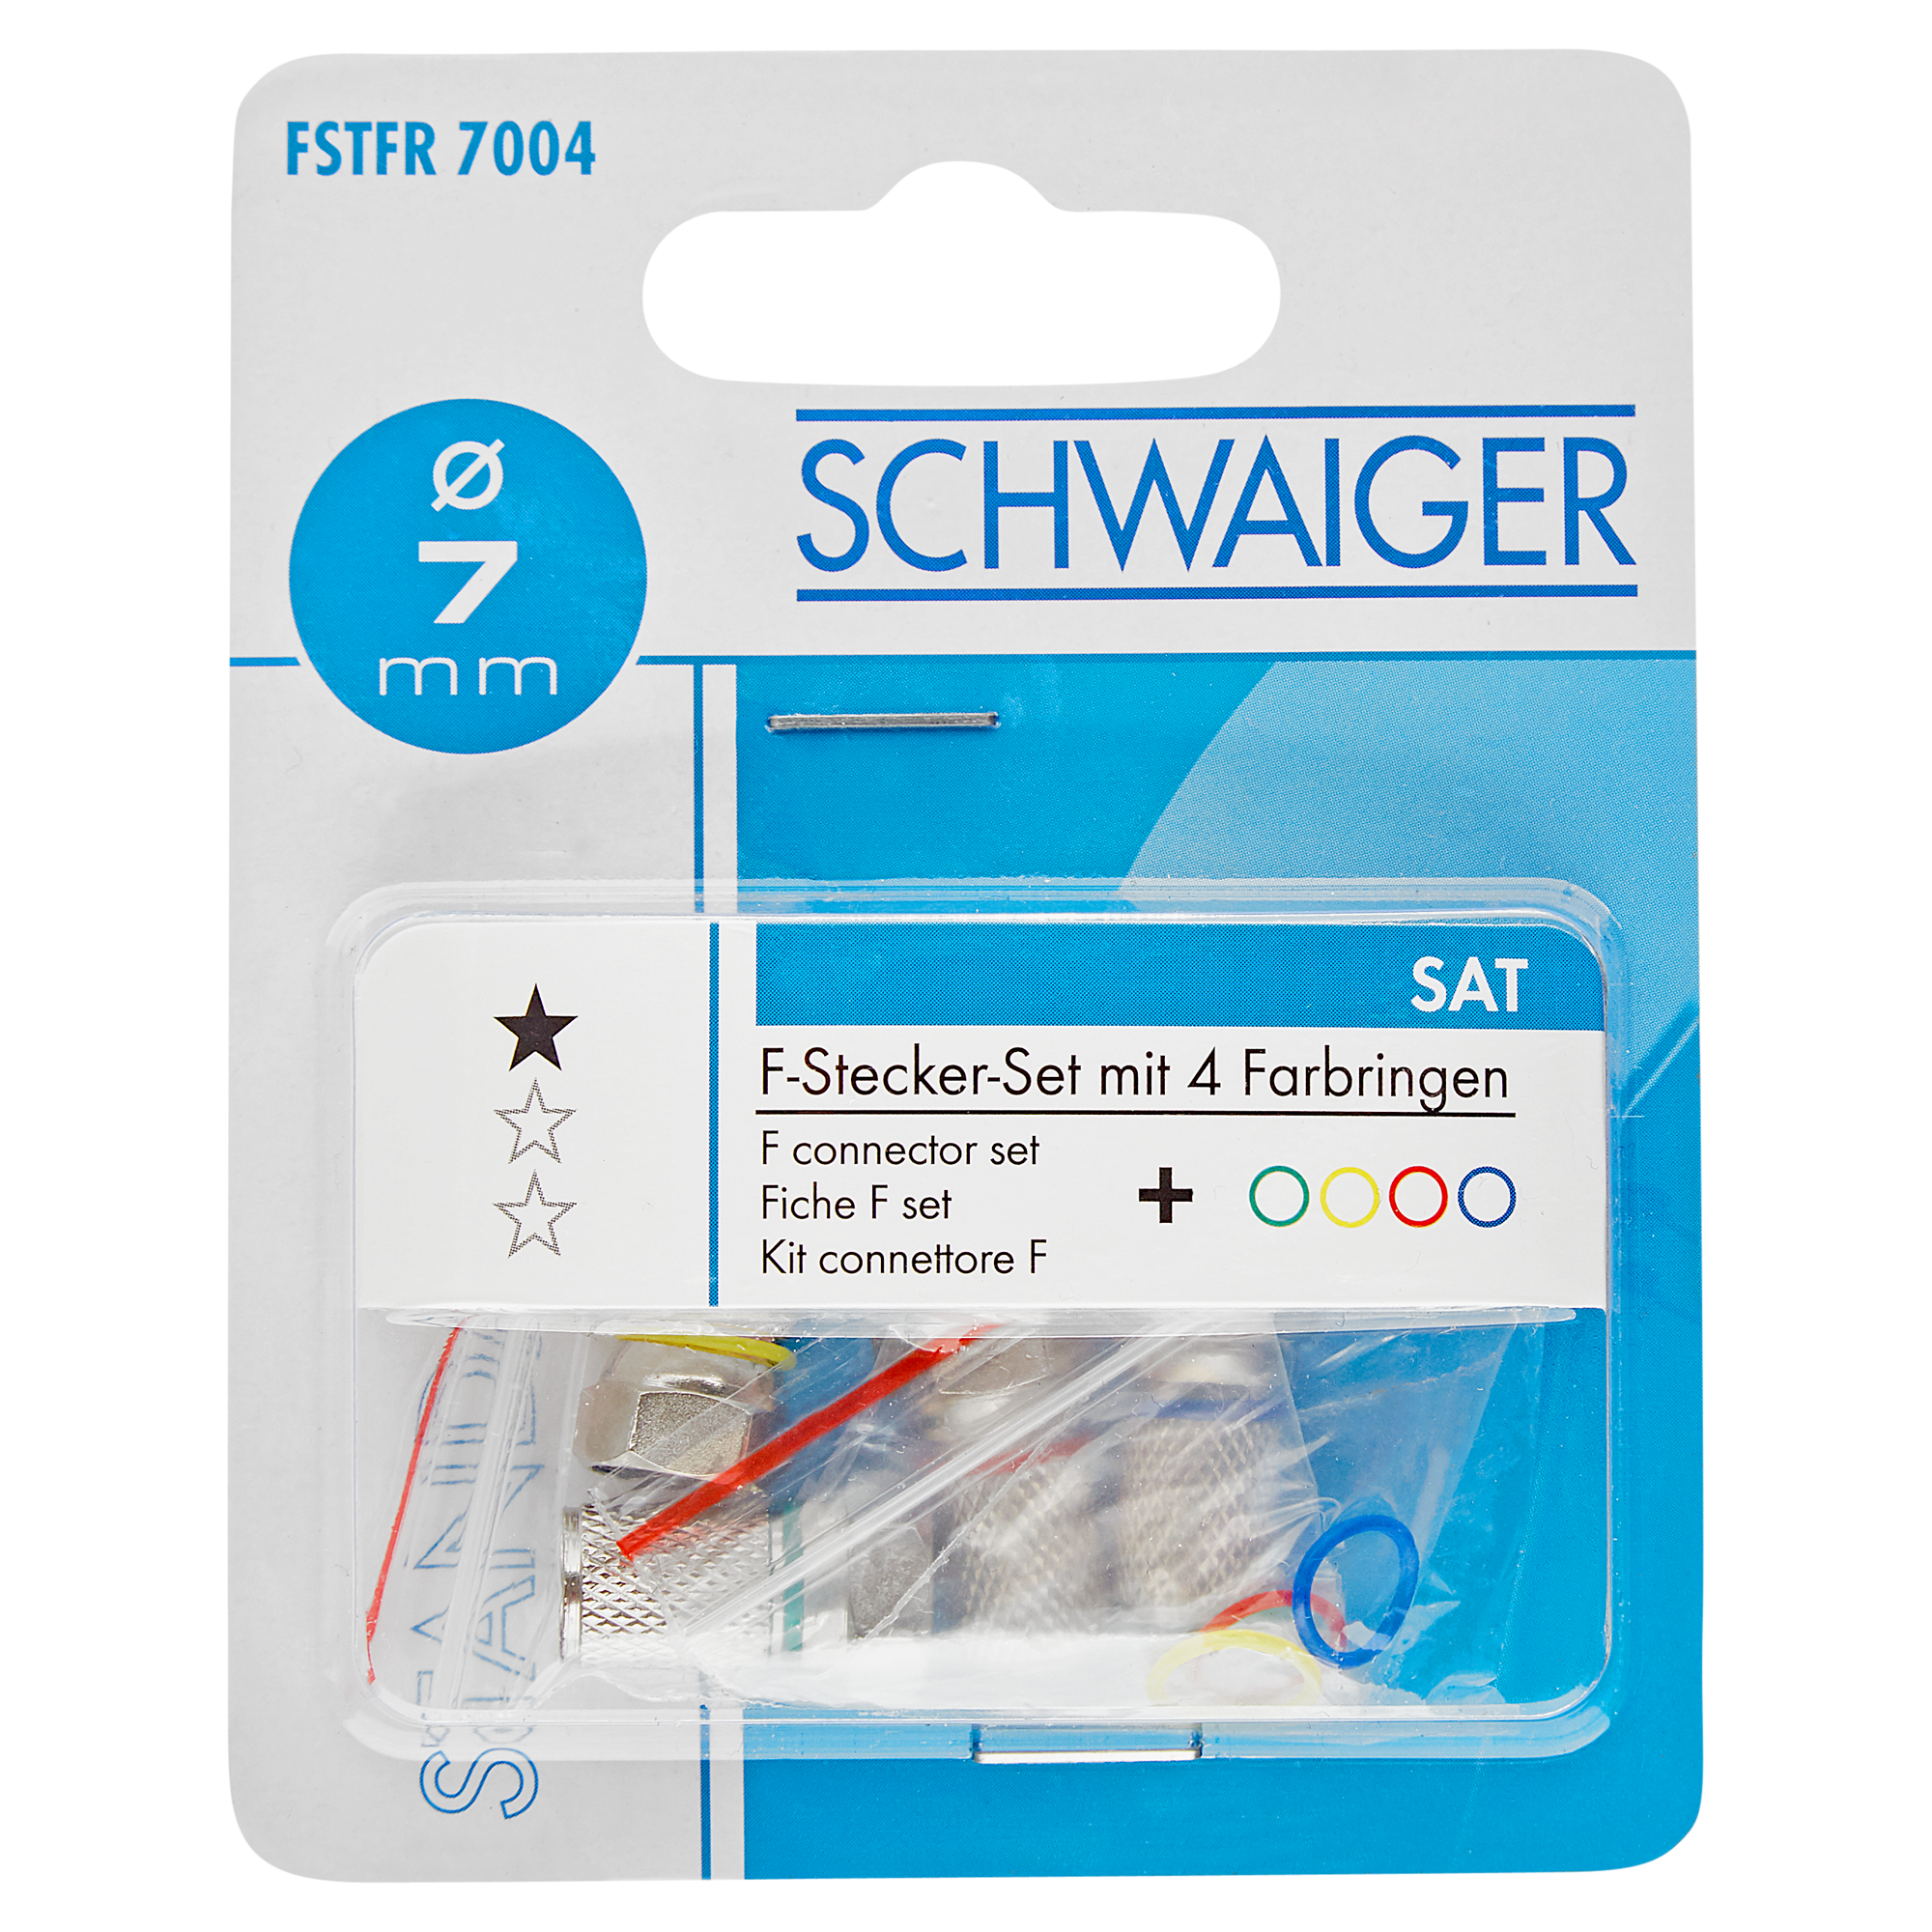 F-Stecker-Set FSTFR 7004 mit 4 Farbringen Ø 7 mm + product picture